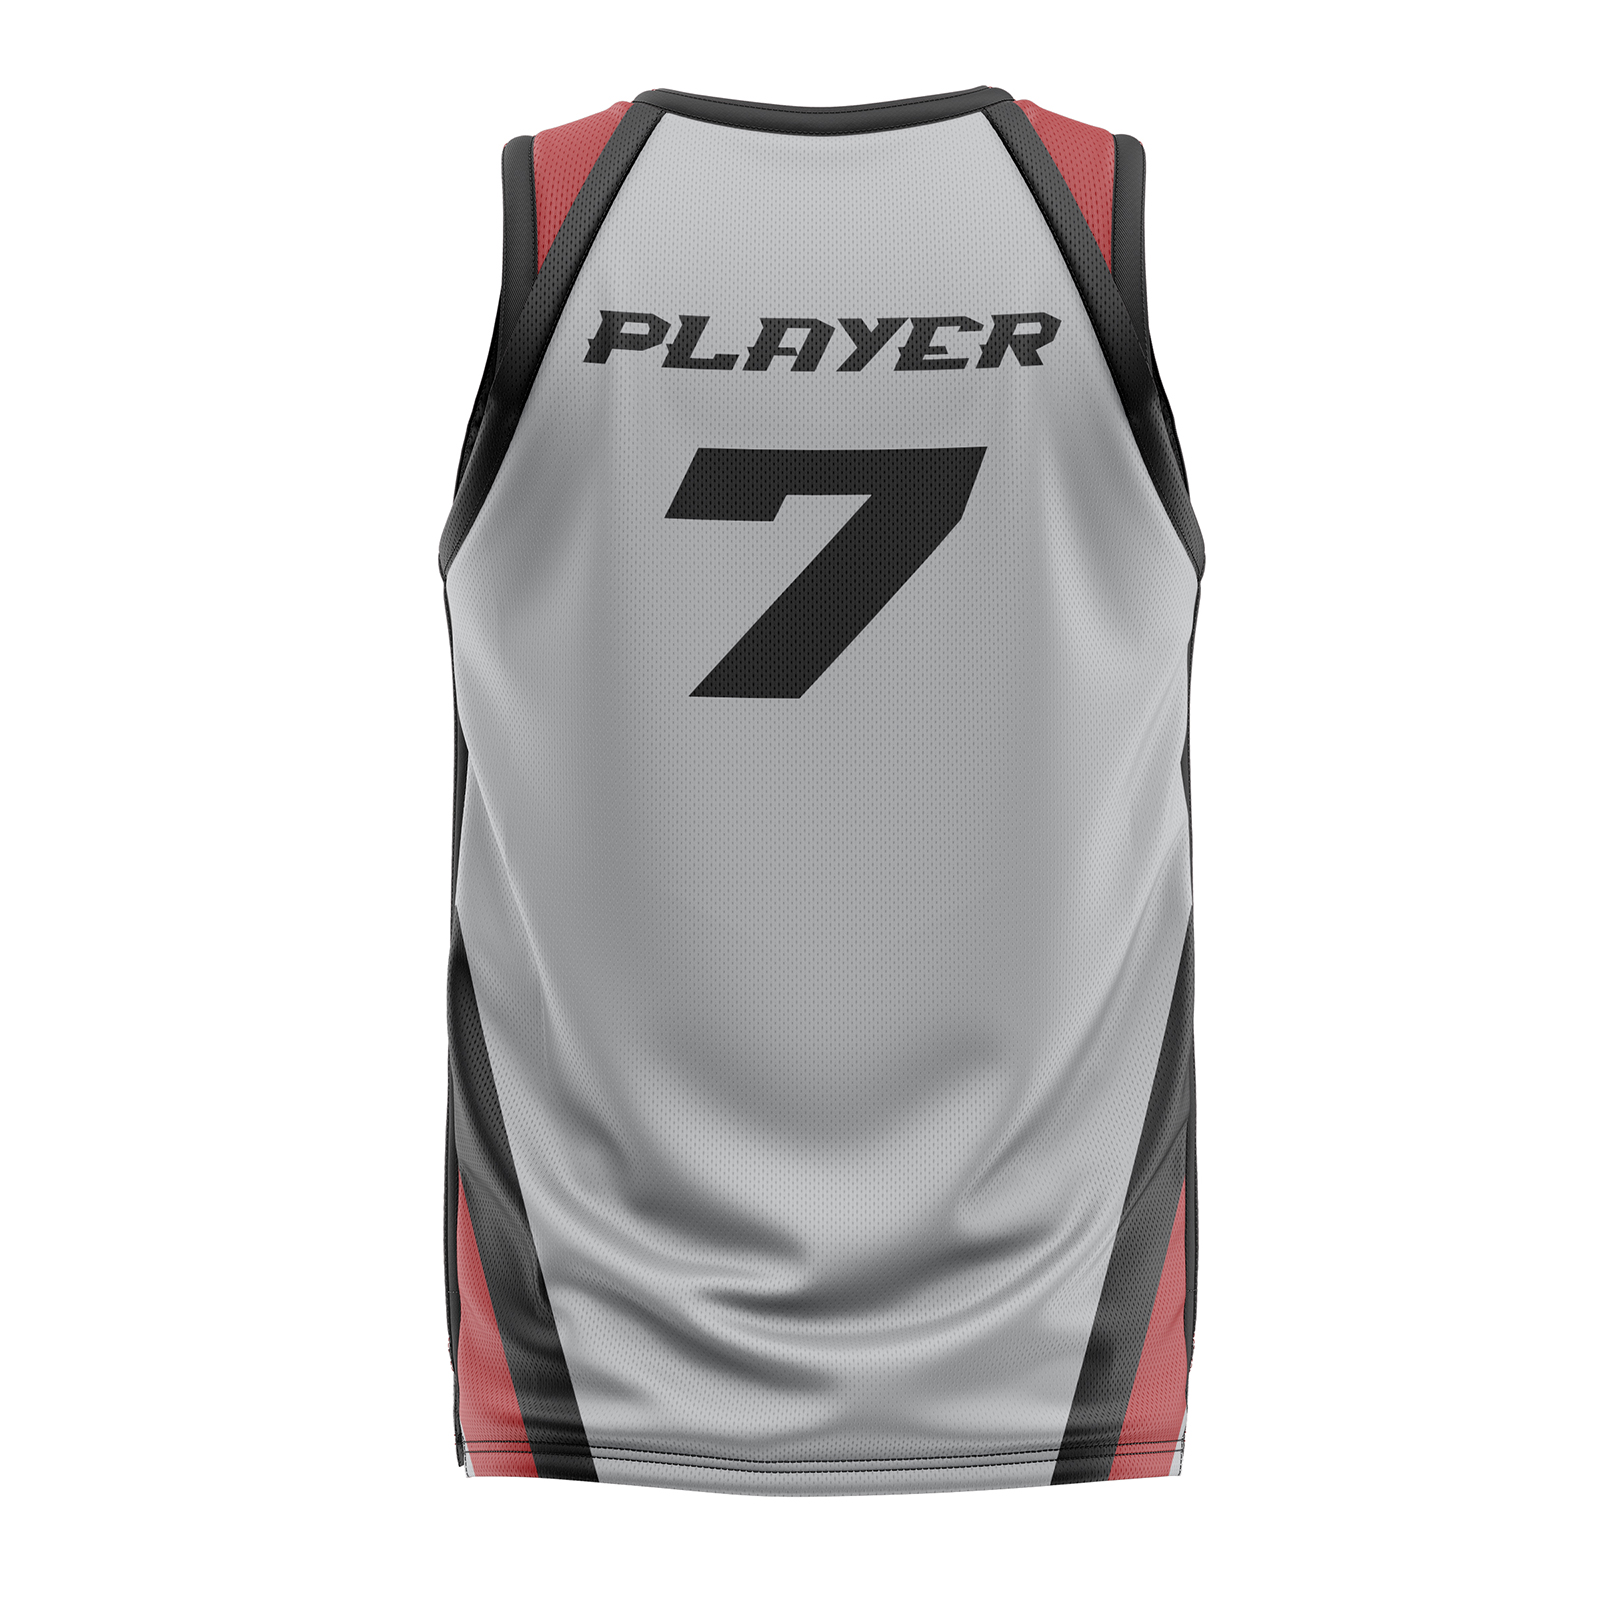 design own basketball jersey